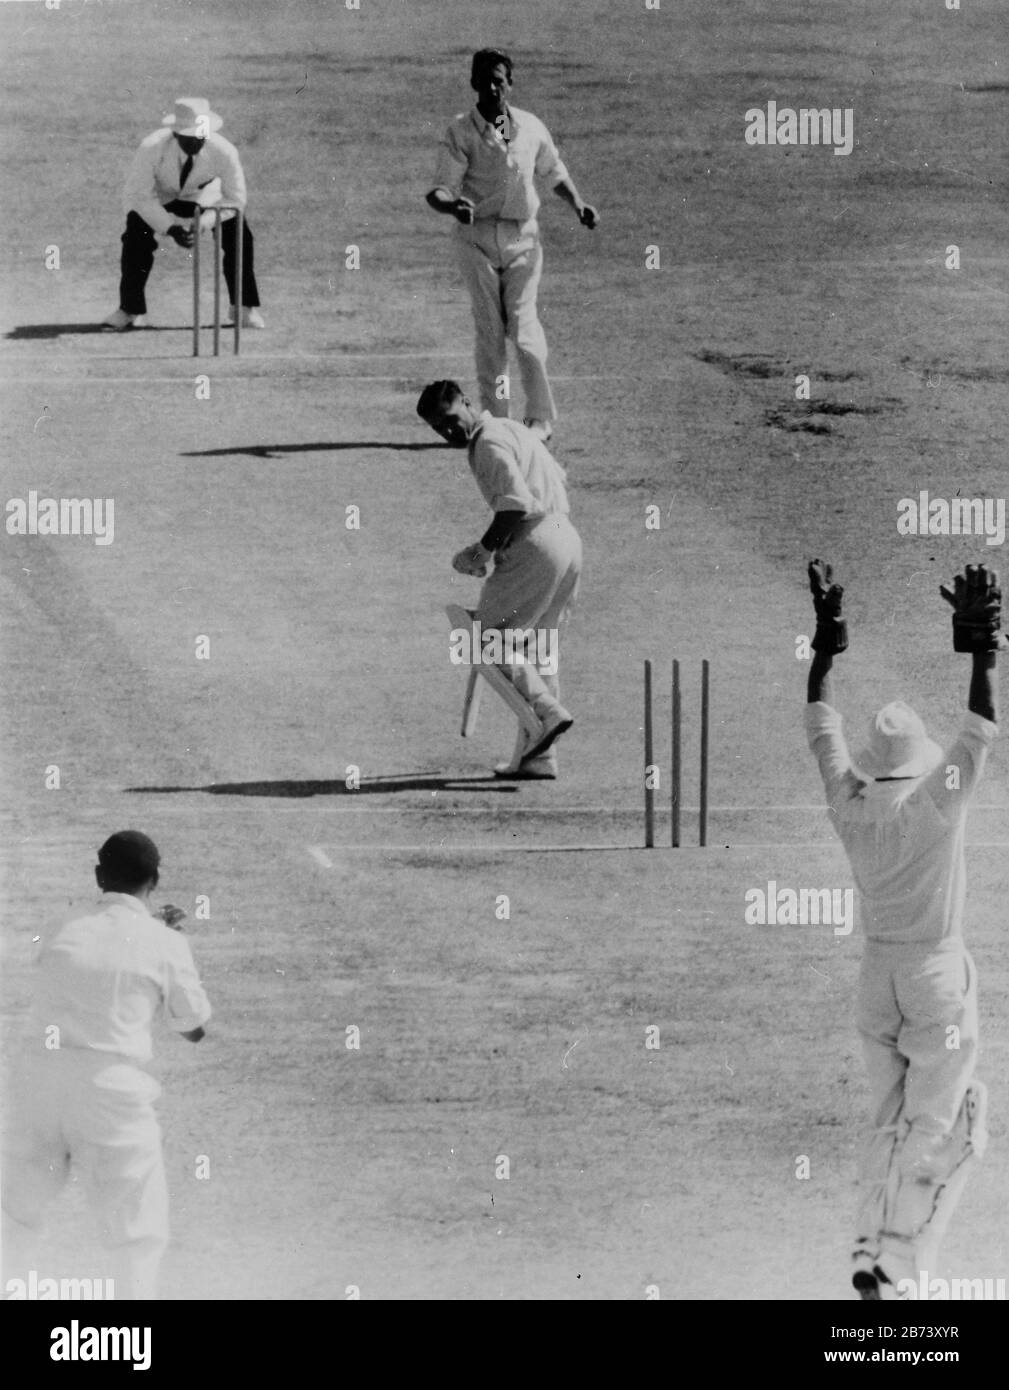 neil harvey, brian statham, cricket, brisbane 1962 Stock Photo